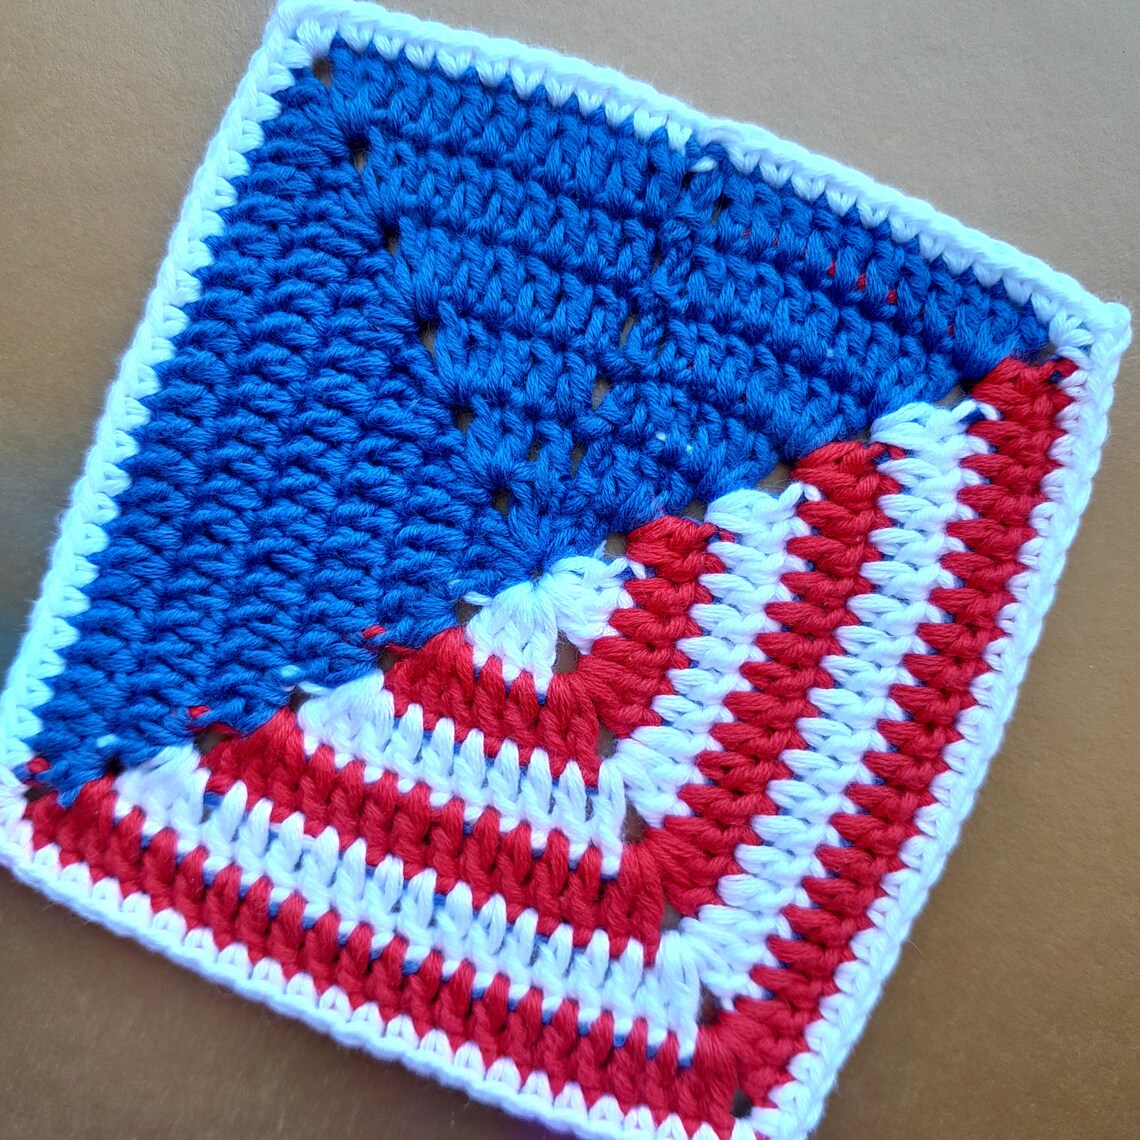 Granny Square American Flag Pattern, Patriotic Granny Square Pattern
etsy.com/listing/168143…

#Etsy #EtsyShop #EtsySeller #EtsySocial #crochet #GrannySquarePattern #crochetpattern #CrochetPatterns #grannysquare #grannysquares #crocheter #crocheting #crochetideas